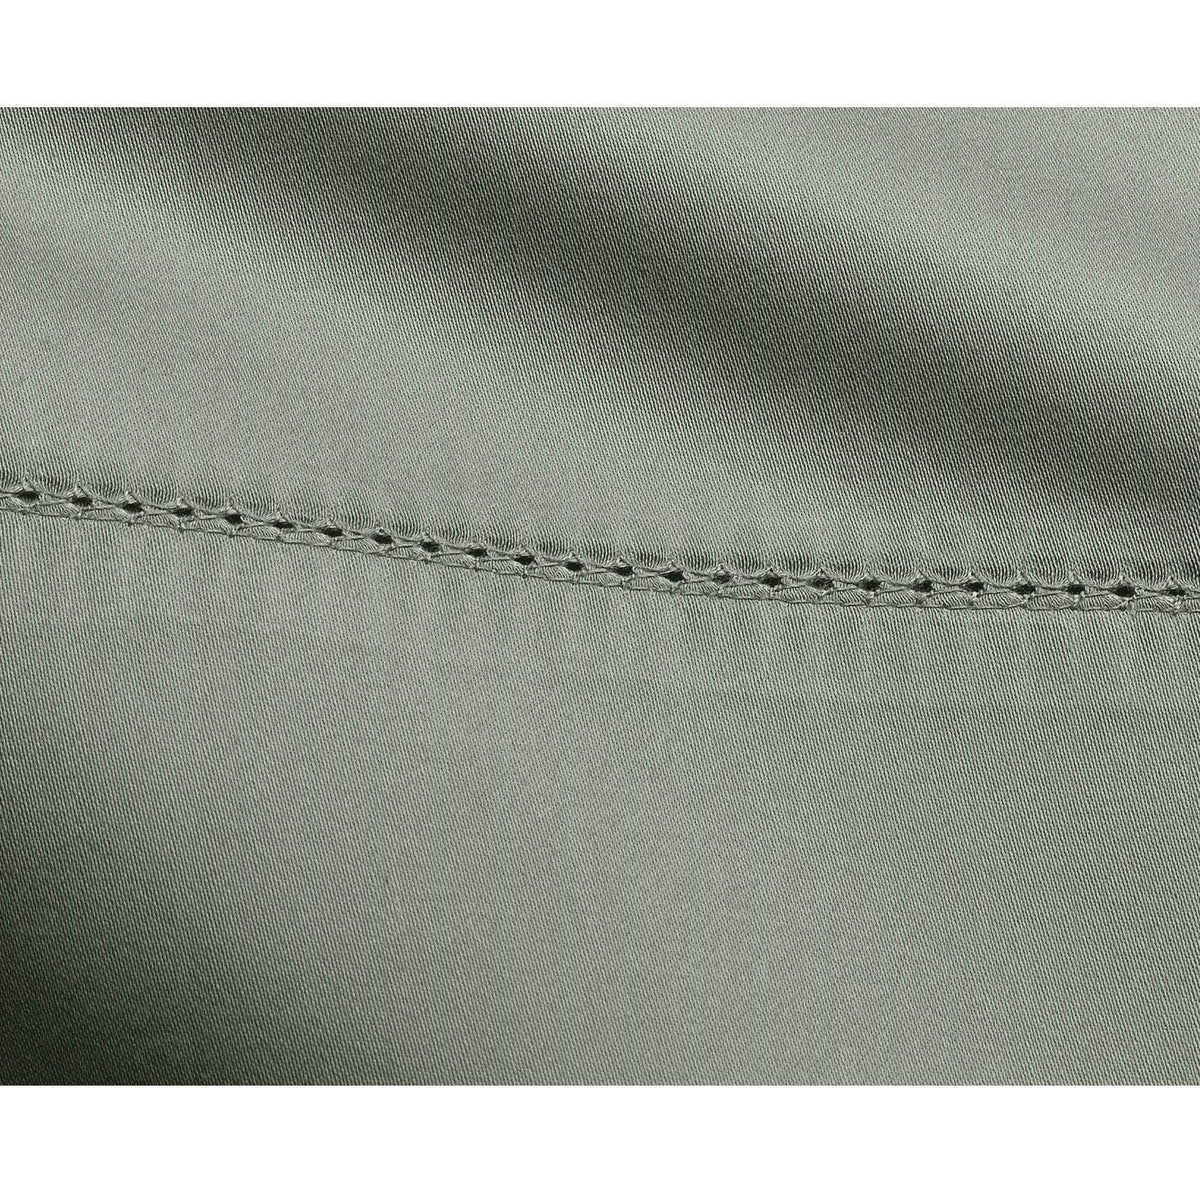 California King size 400 Thread Count Cotton Sheet Set in Sage Green - beddingbag.com